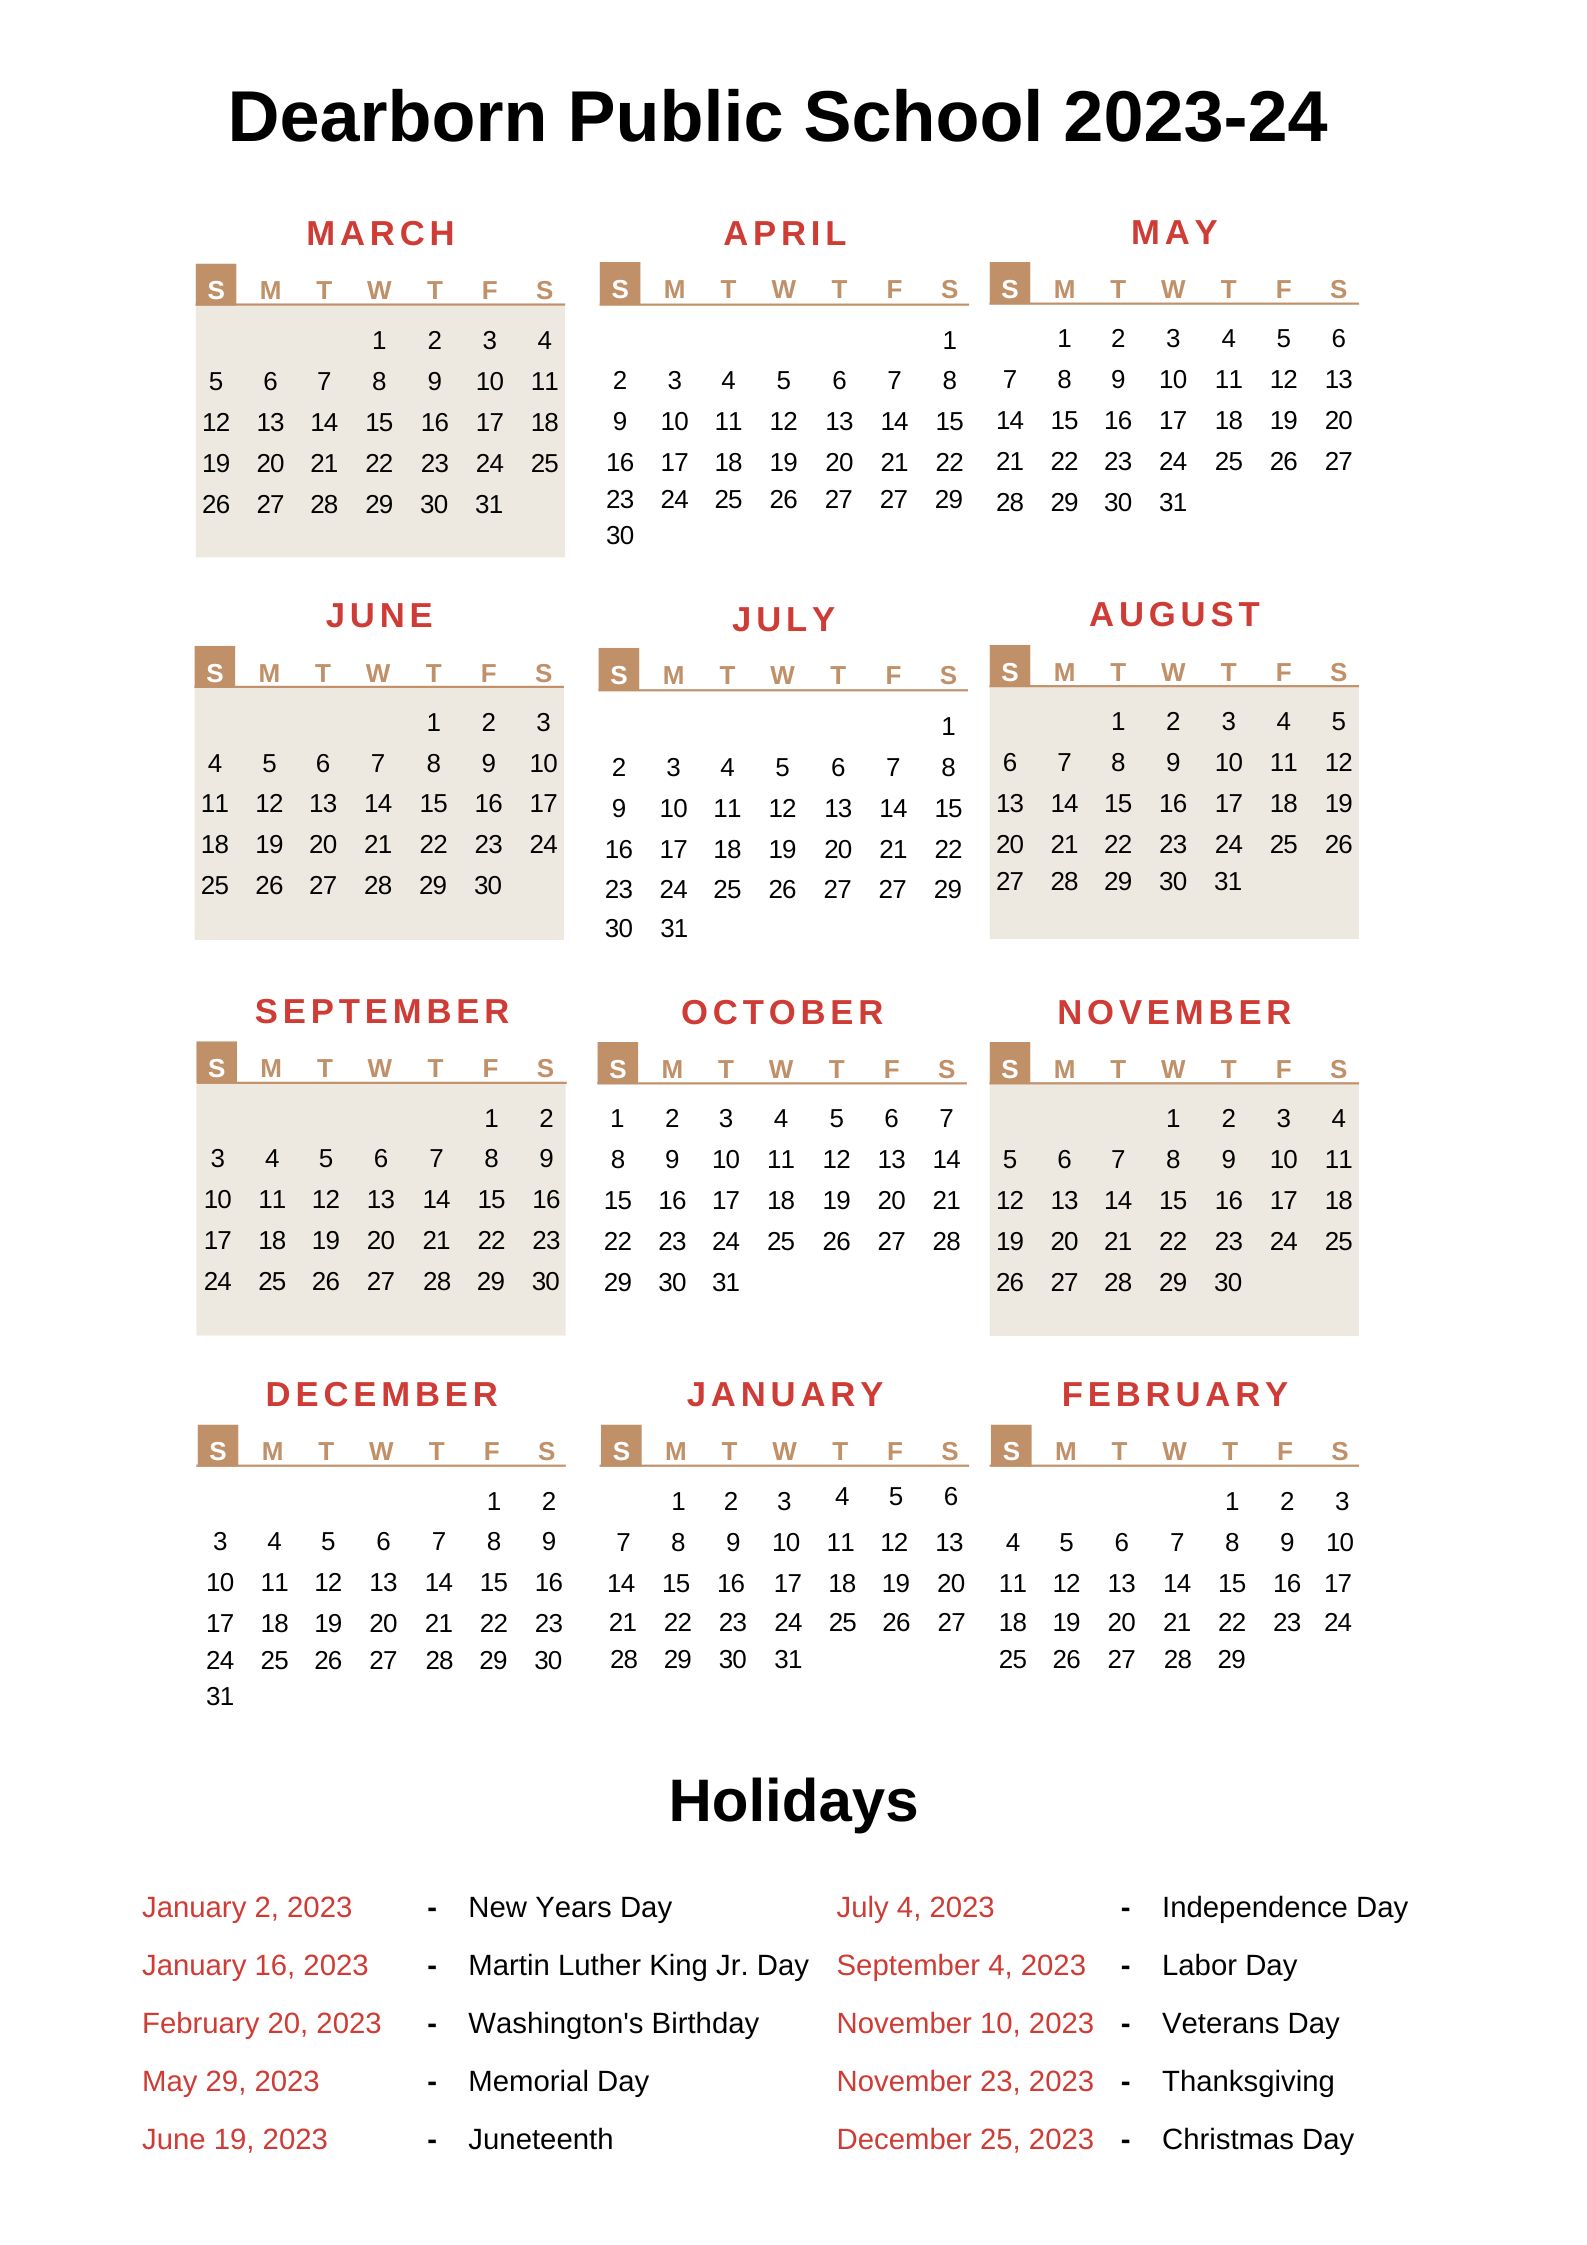 Dearborn Public Schools Calendar 2023 24 